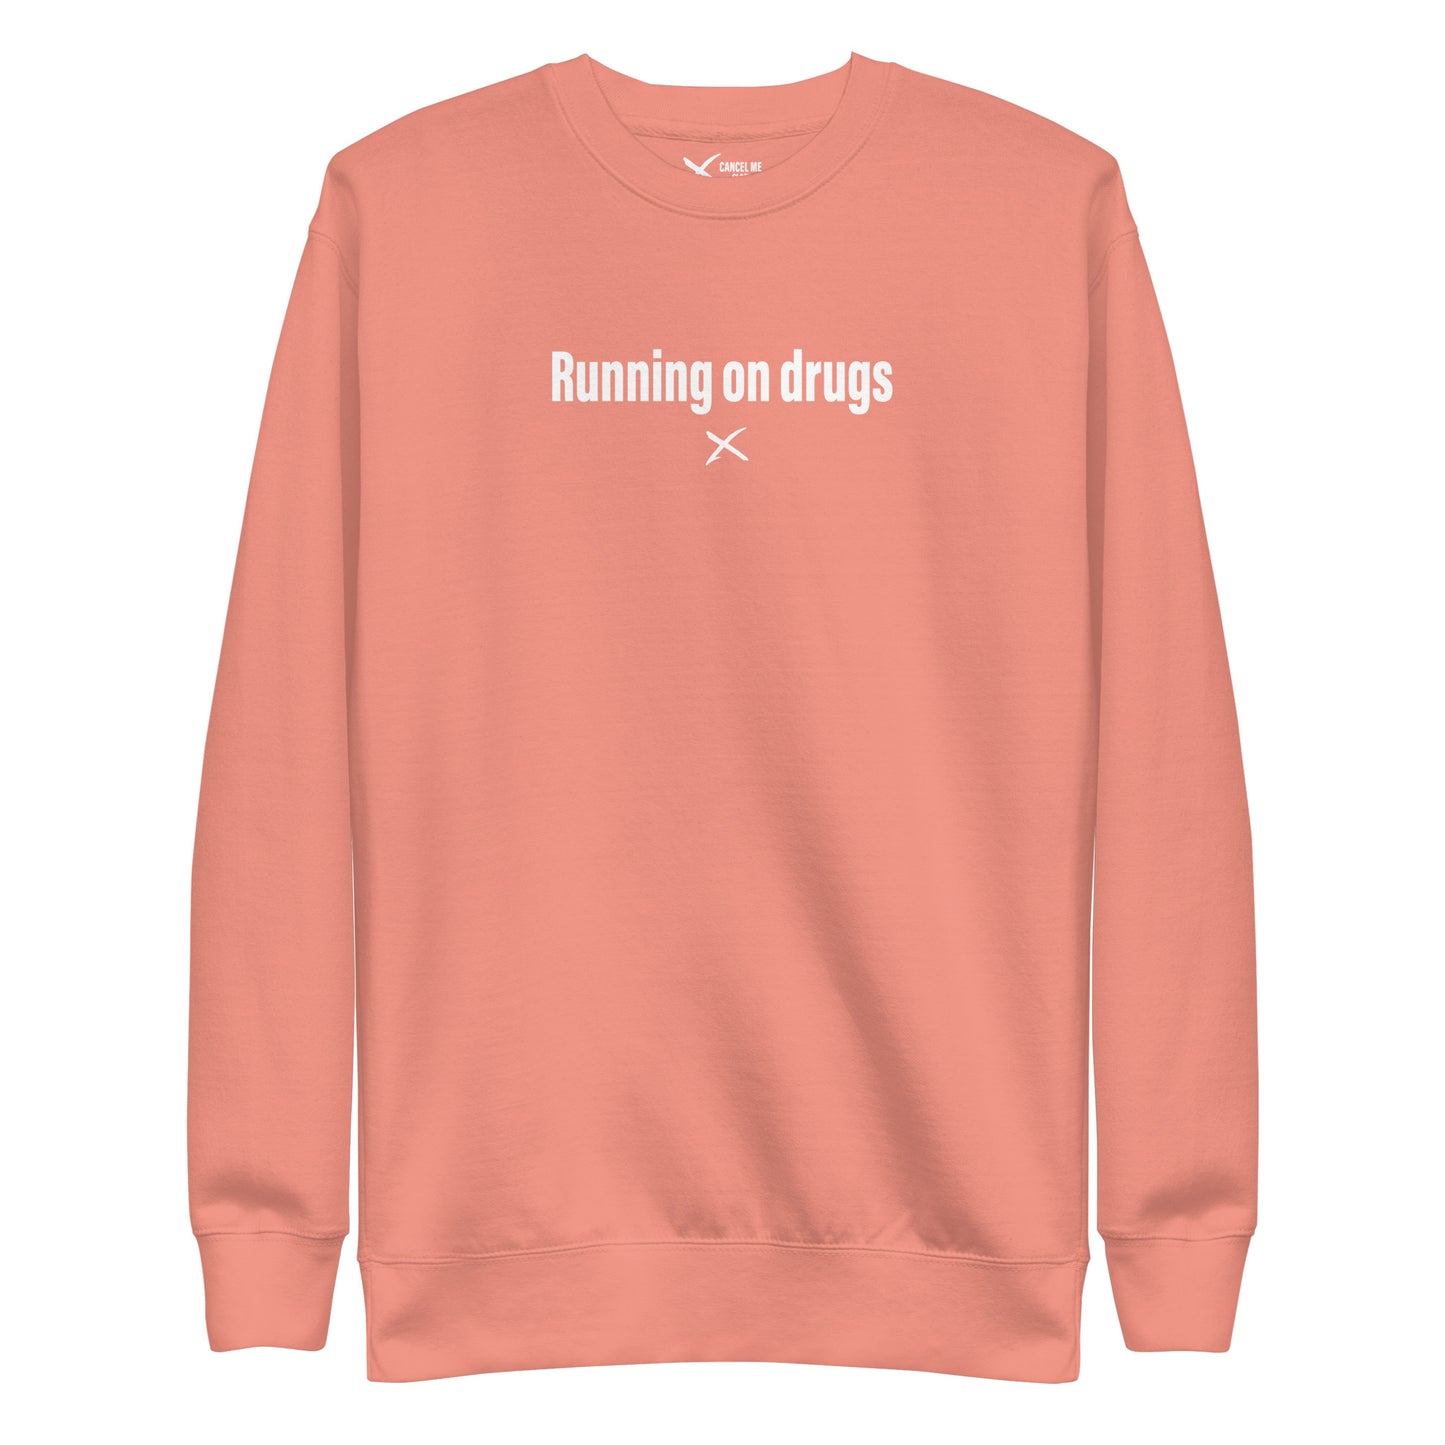 Running on drugs - Sweatshirt